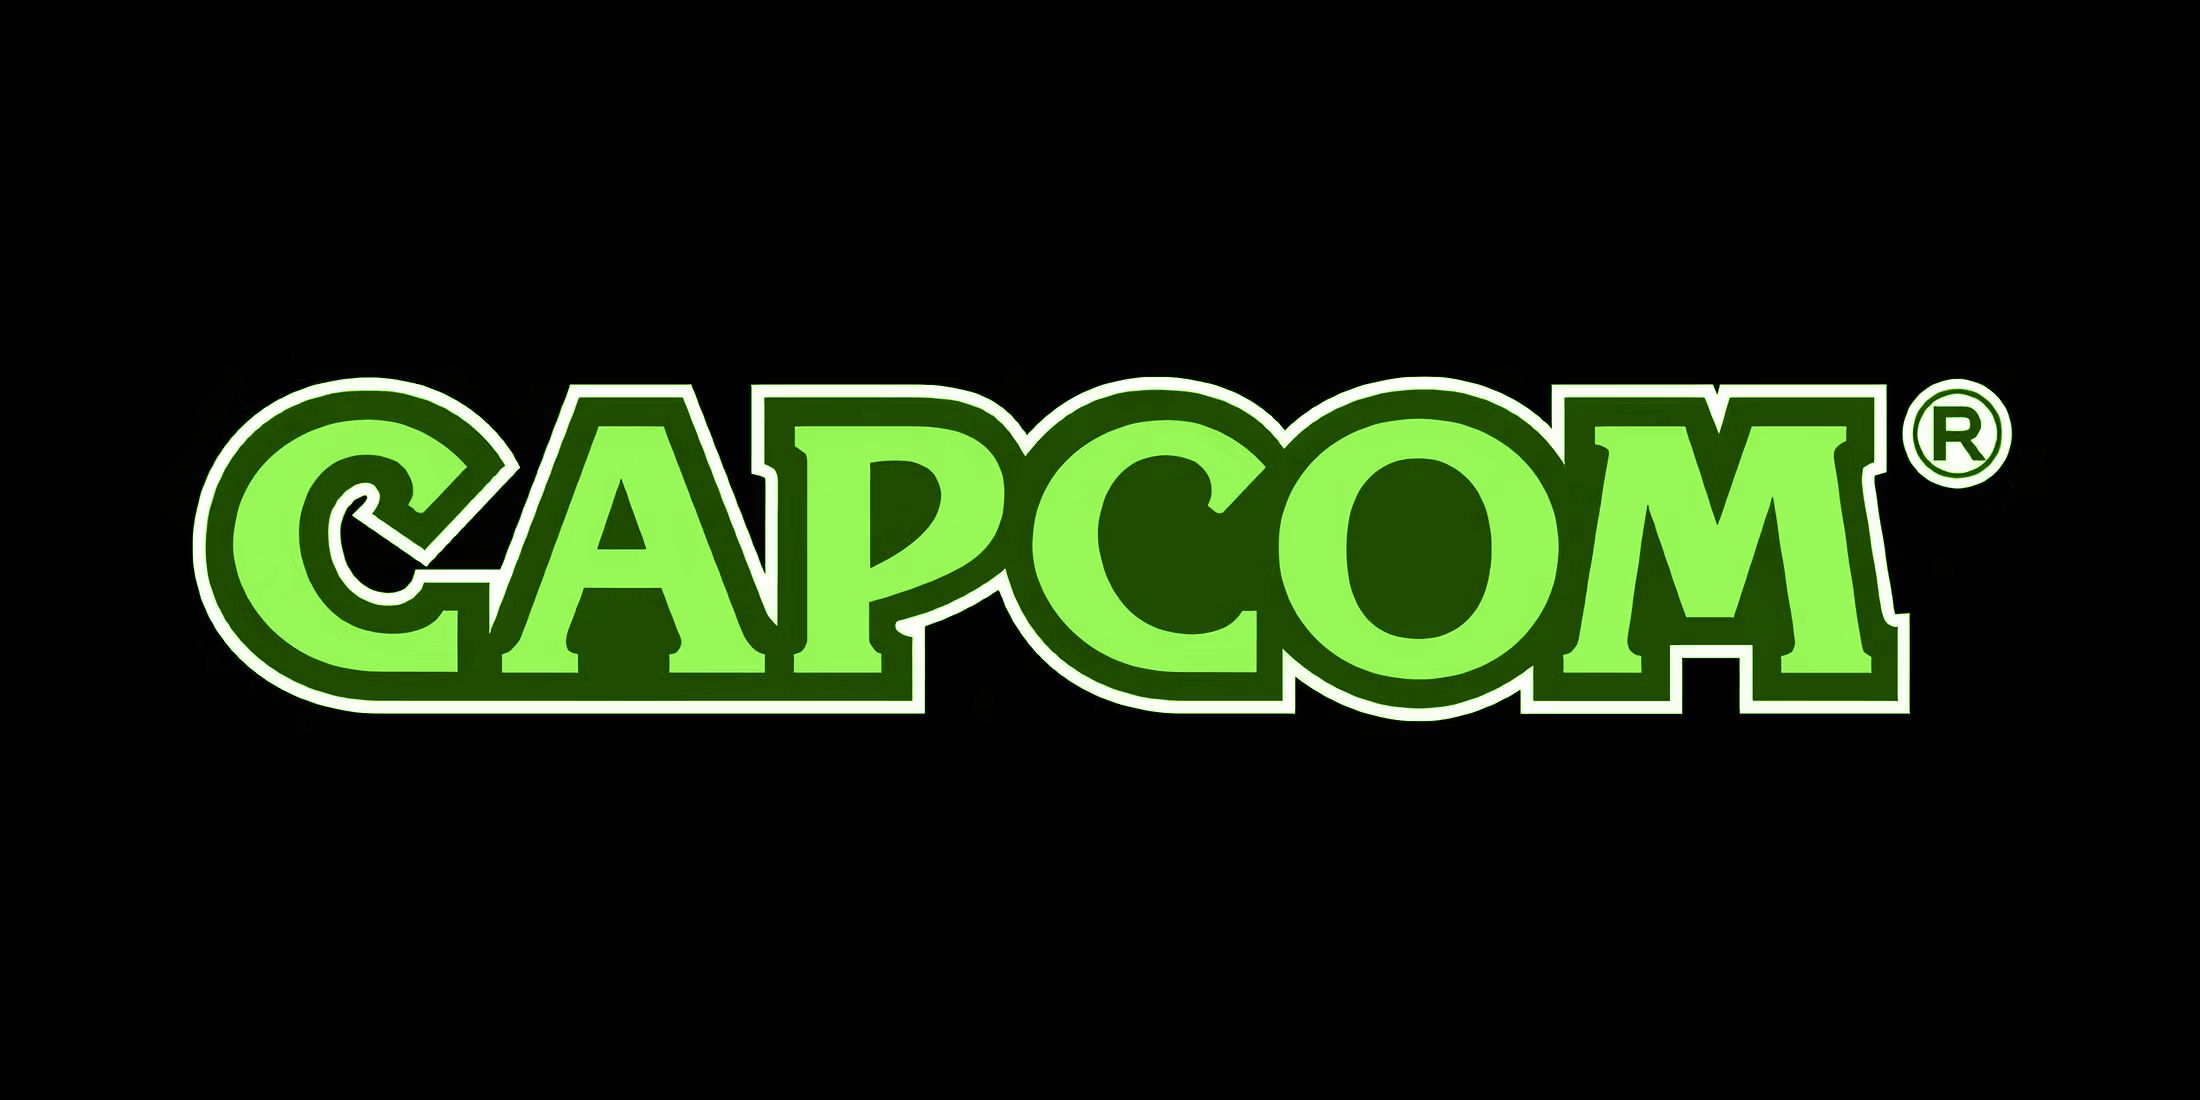 A green-tinted Capcom logo set against a black background.